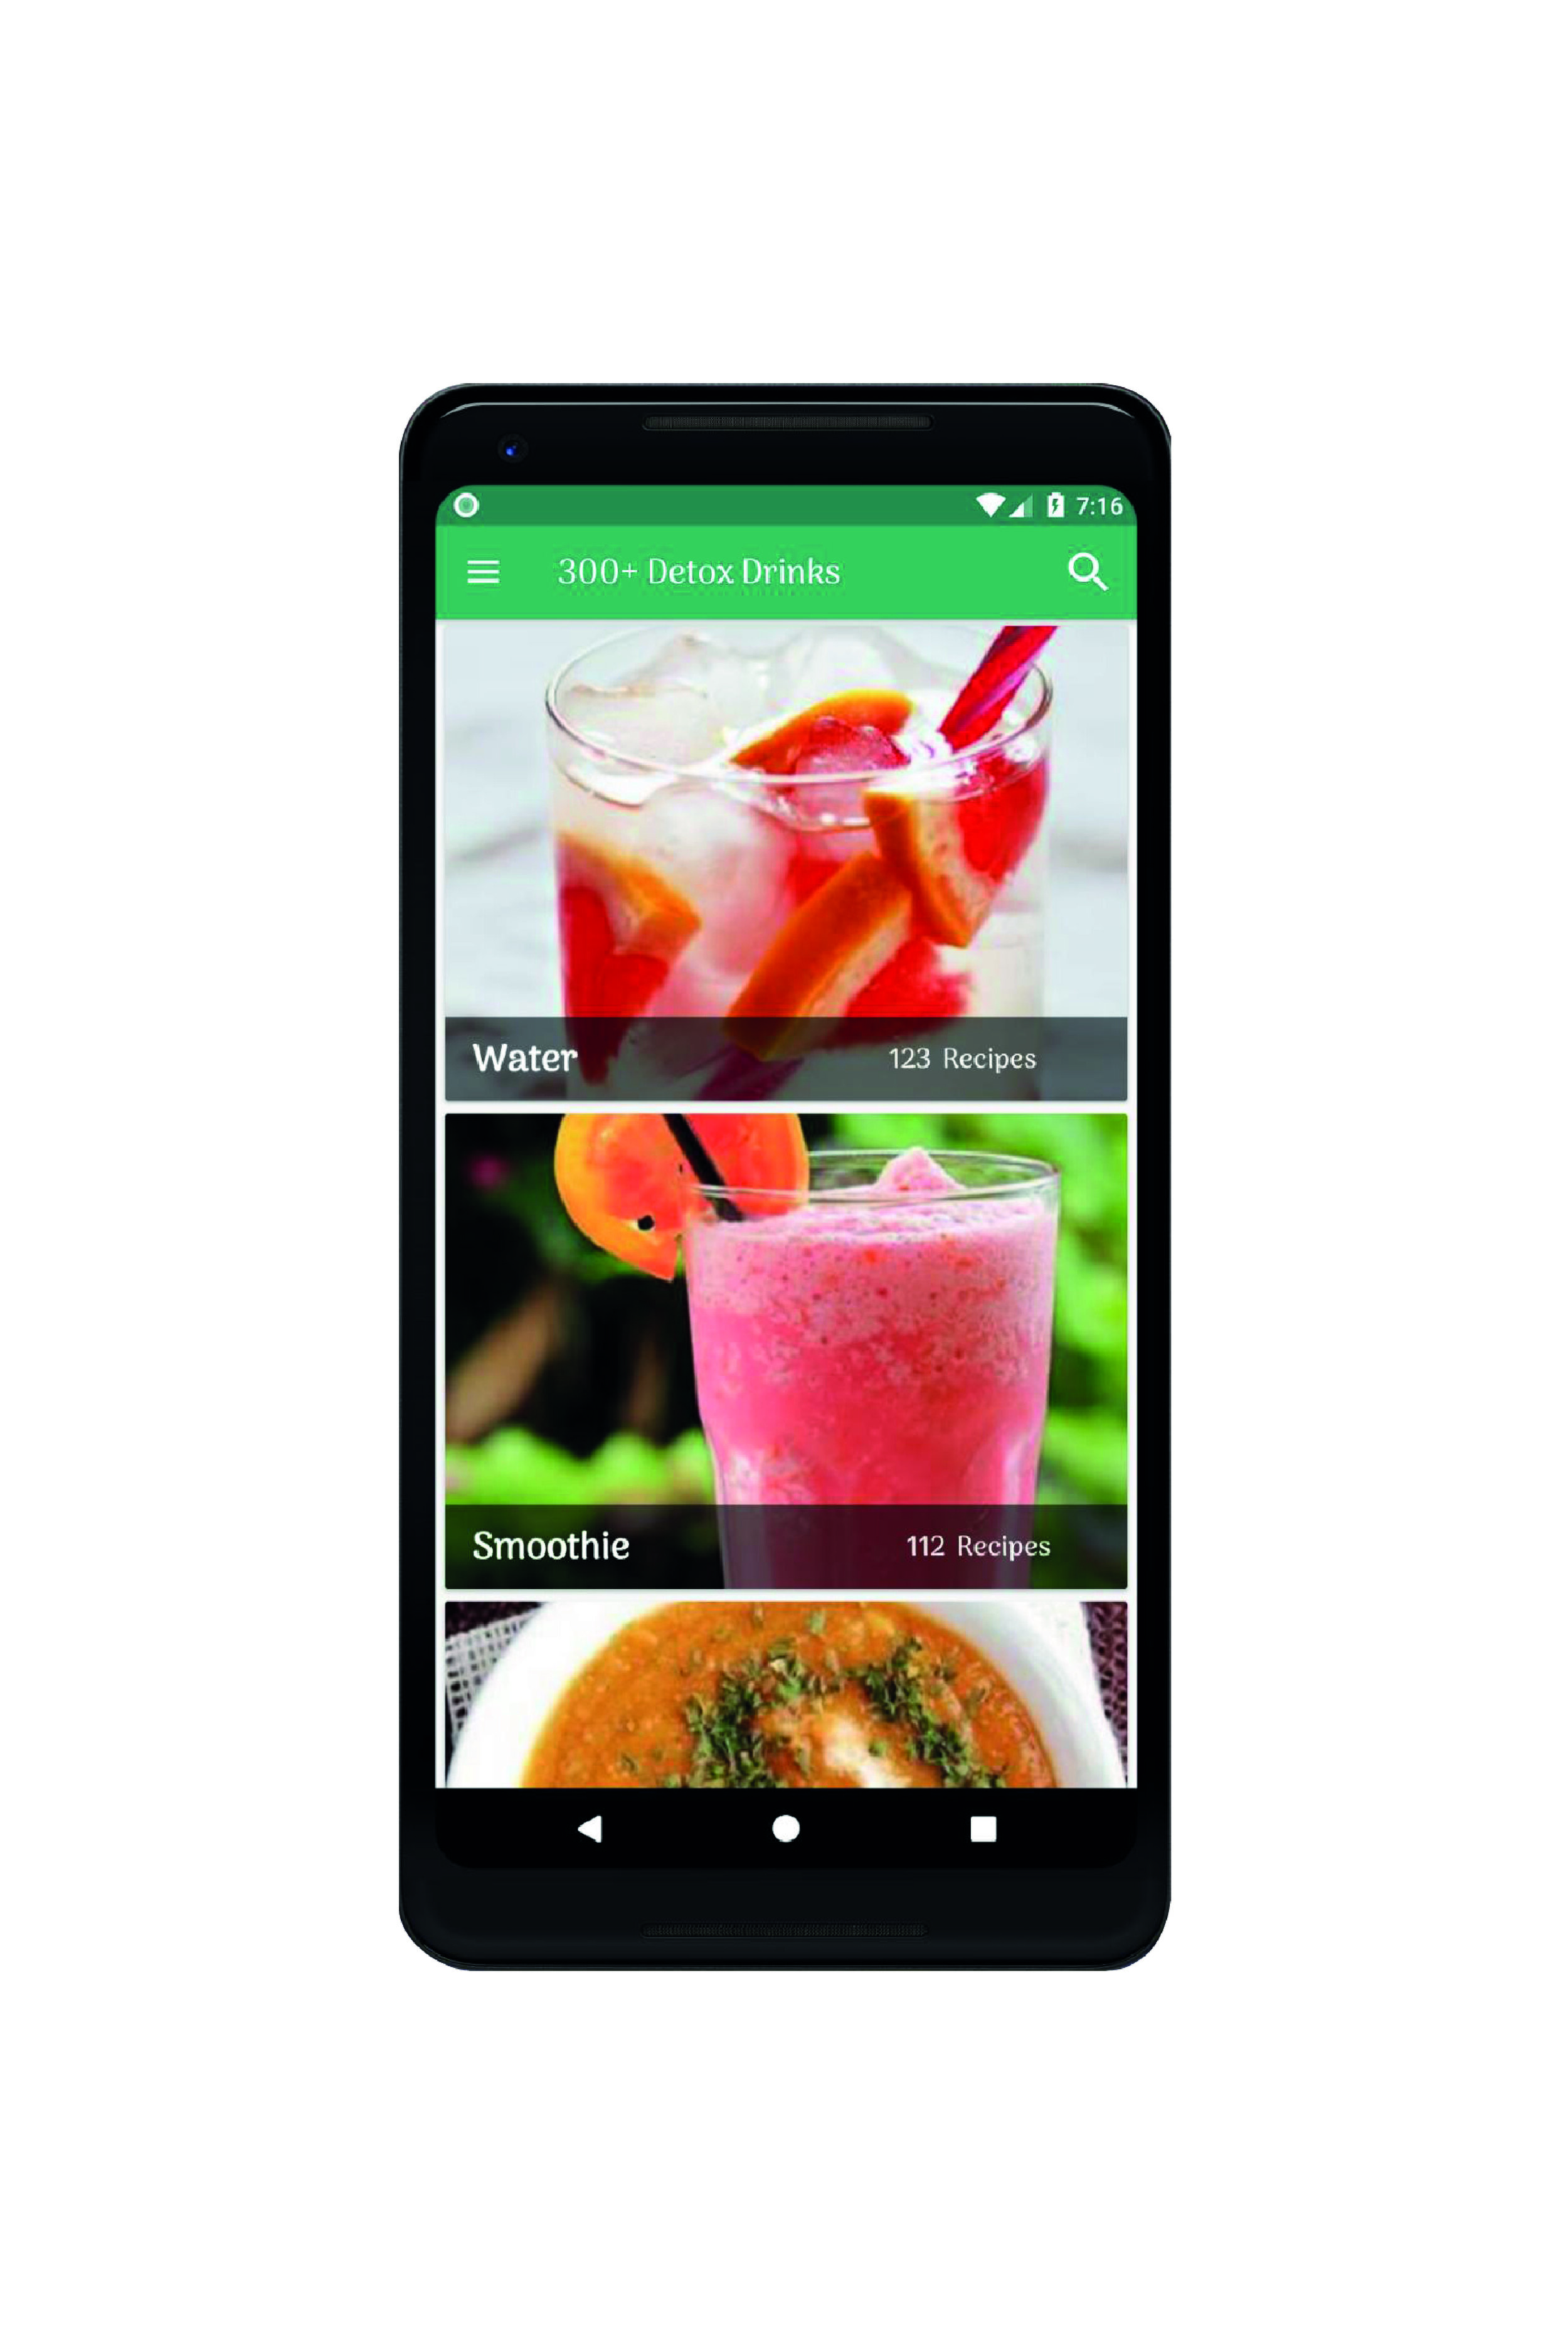   Detox app android  - 300+ detox drinks 